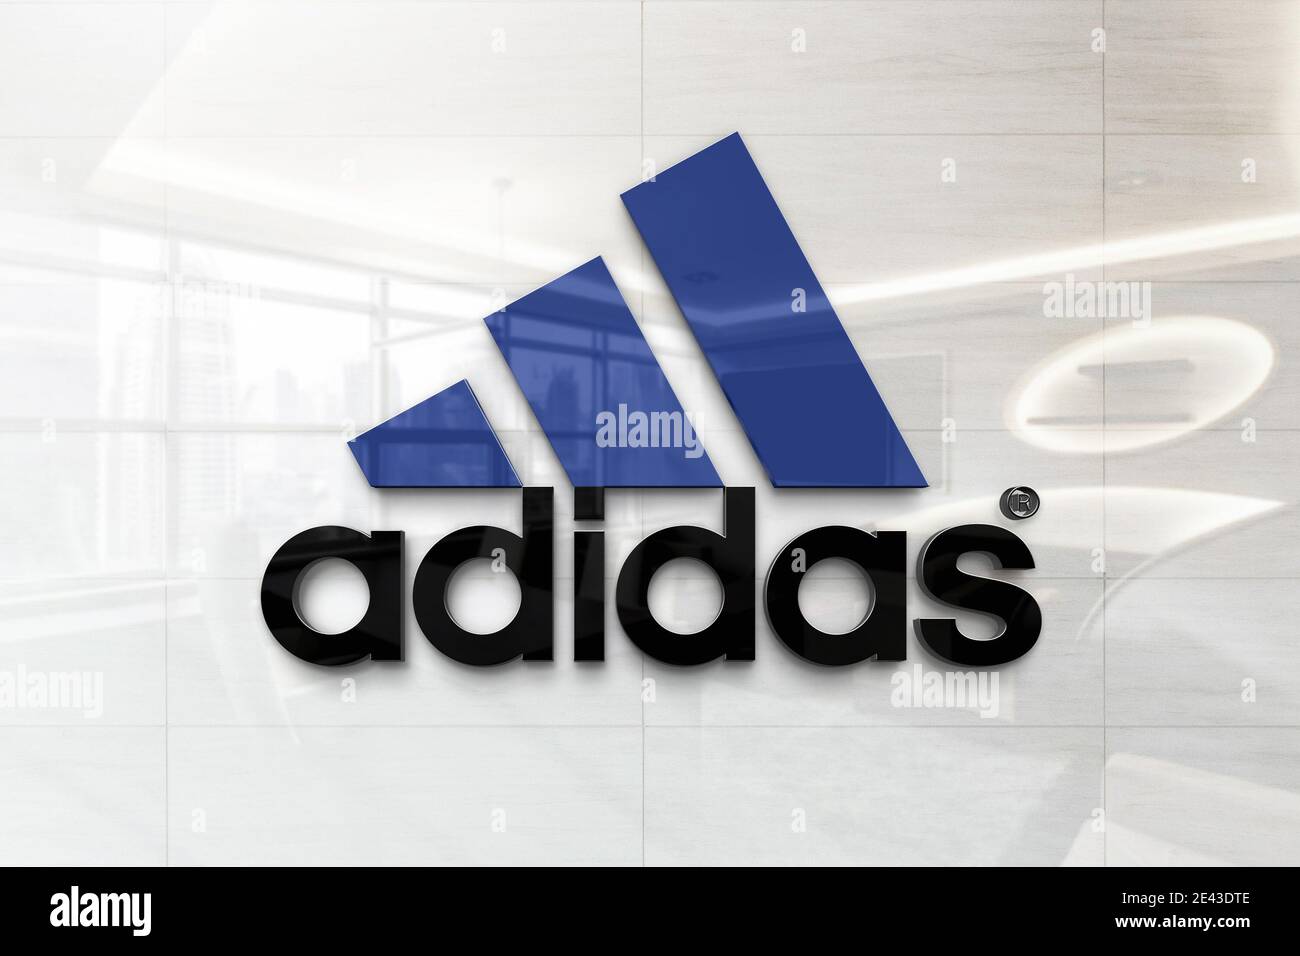 adidas logo on reflective business wall plaque Stock Photo - Alamy